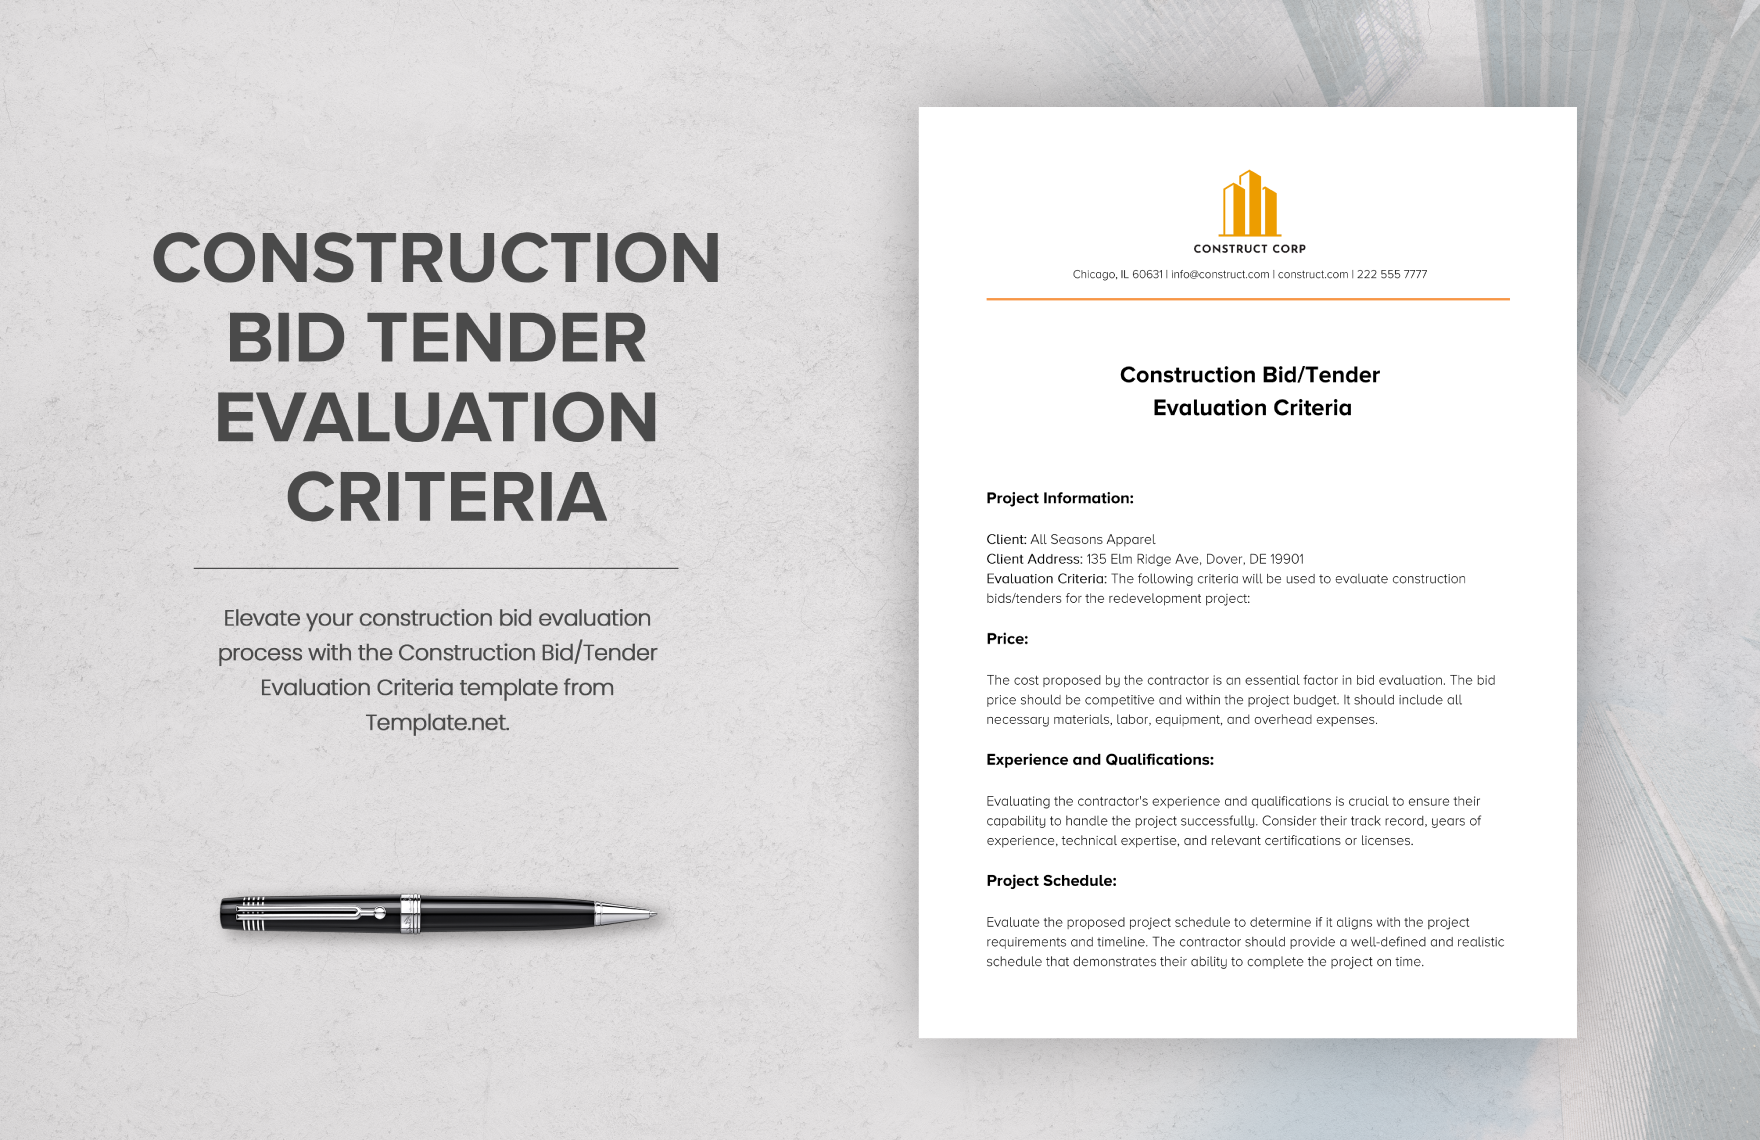 Construction Bid/Tender Evaluation Criteria